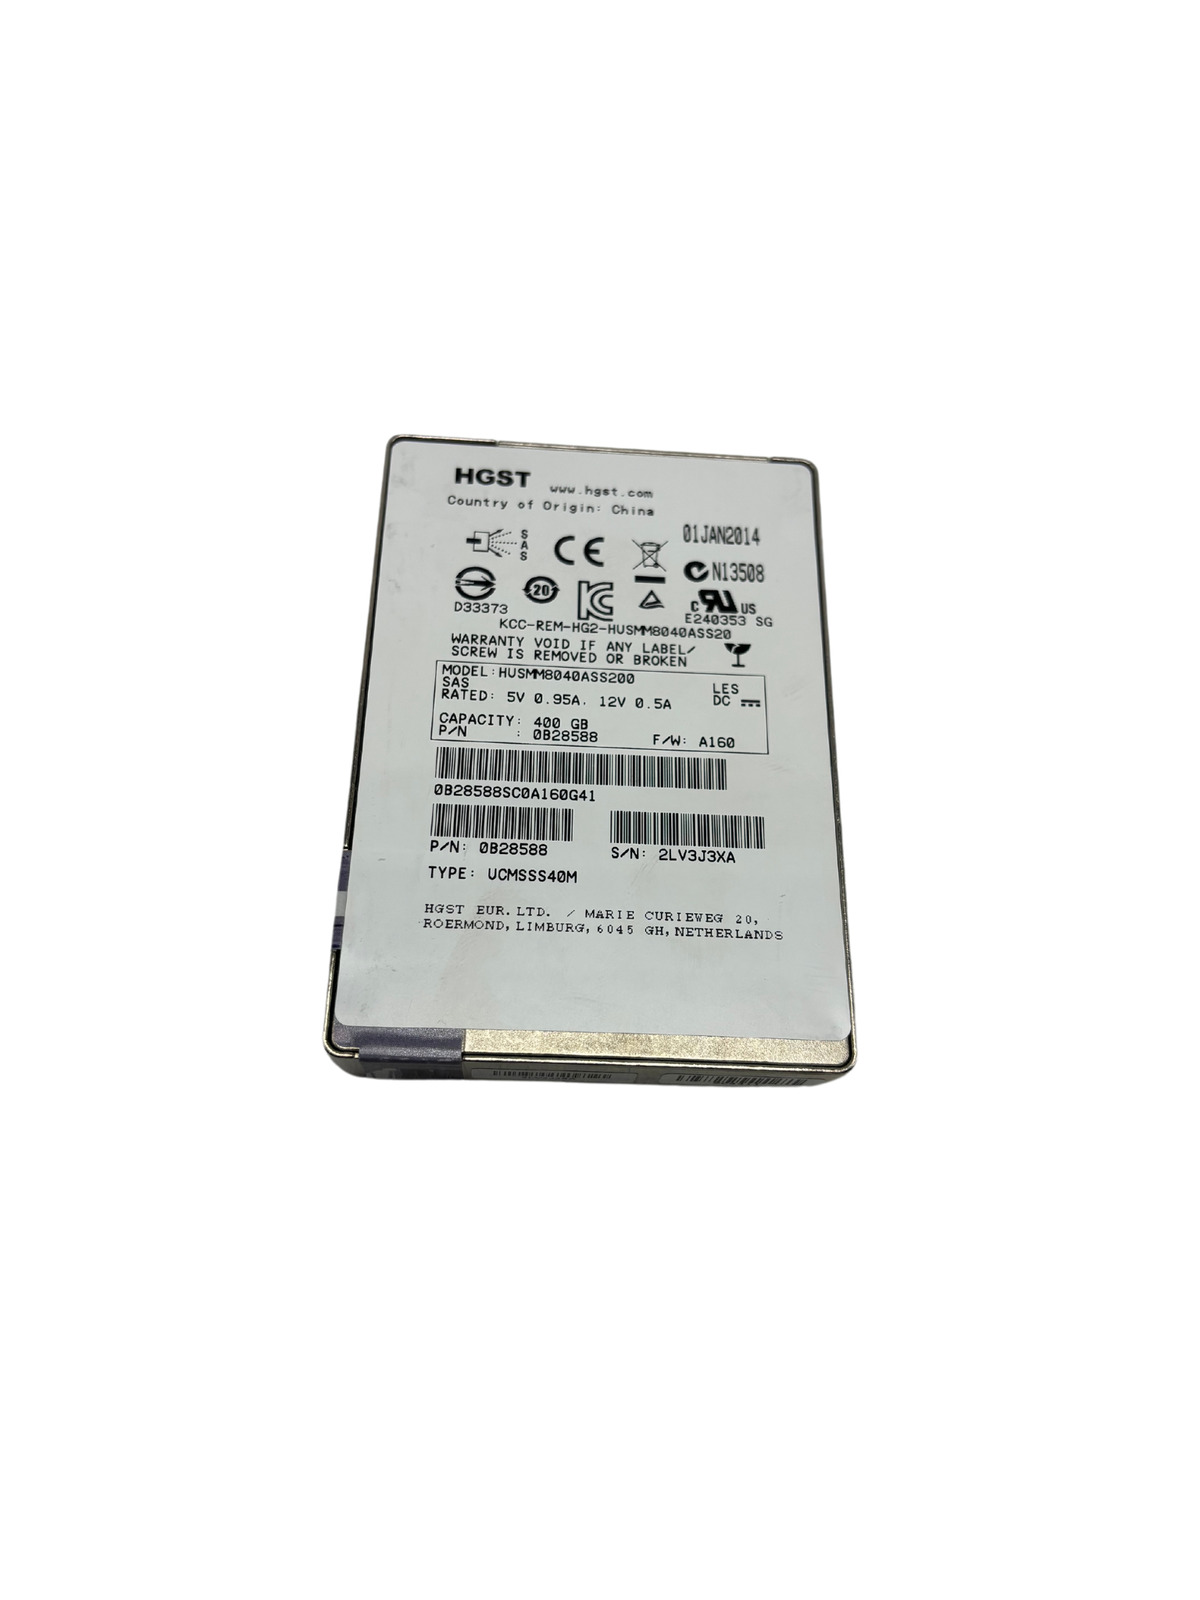 HITACHI HUSMM8040ASS200 400GB MCL 12G SAS SSD Hard Drive 0B285888